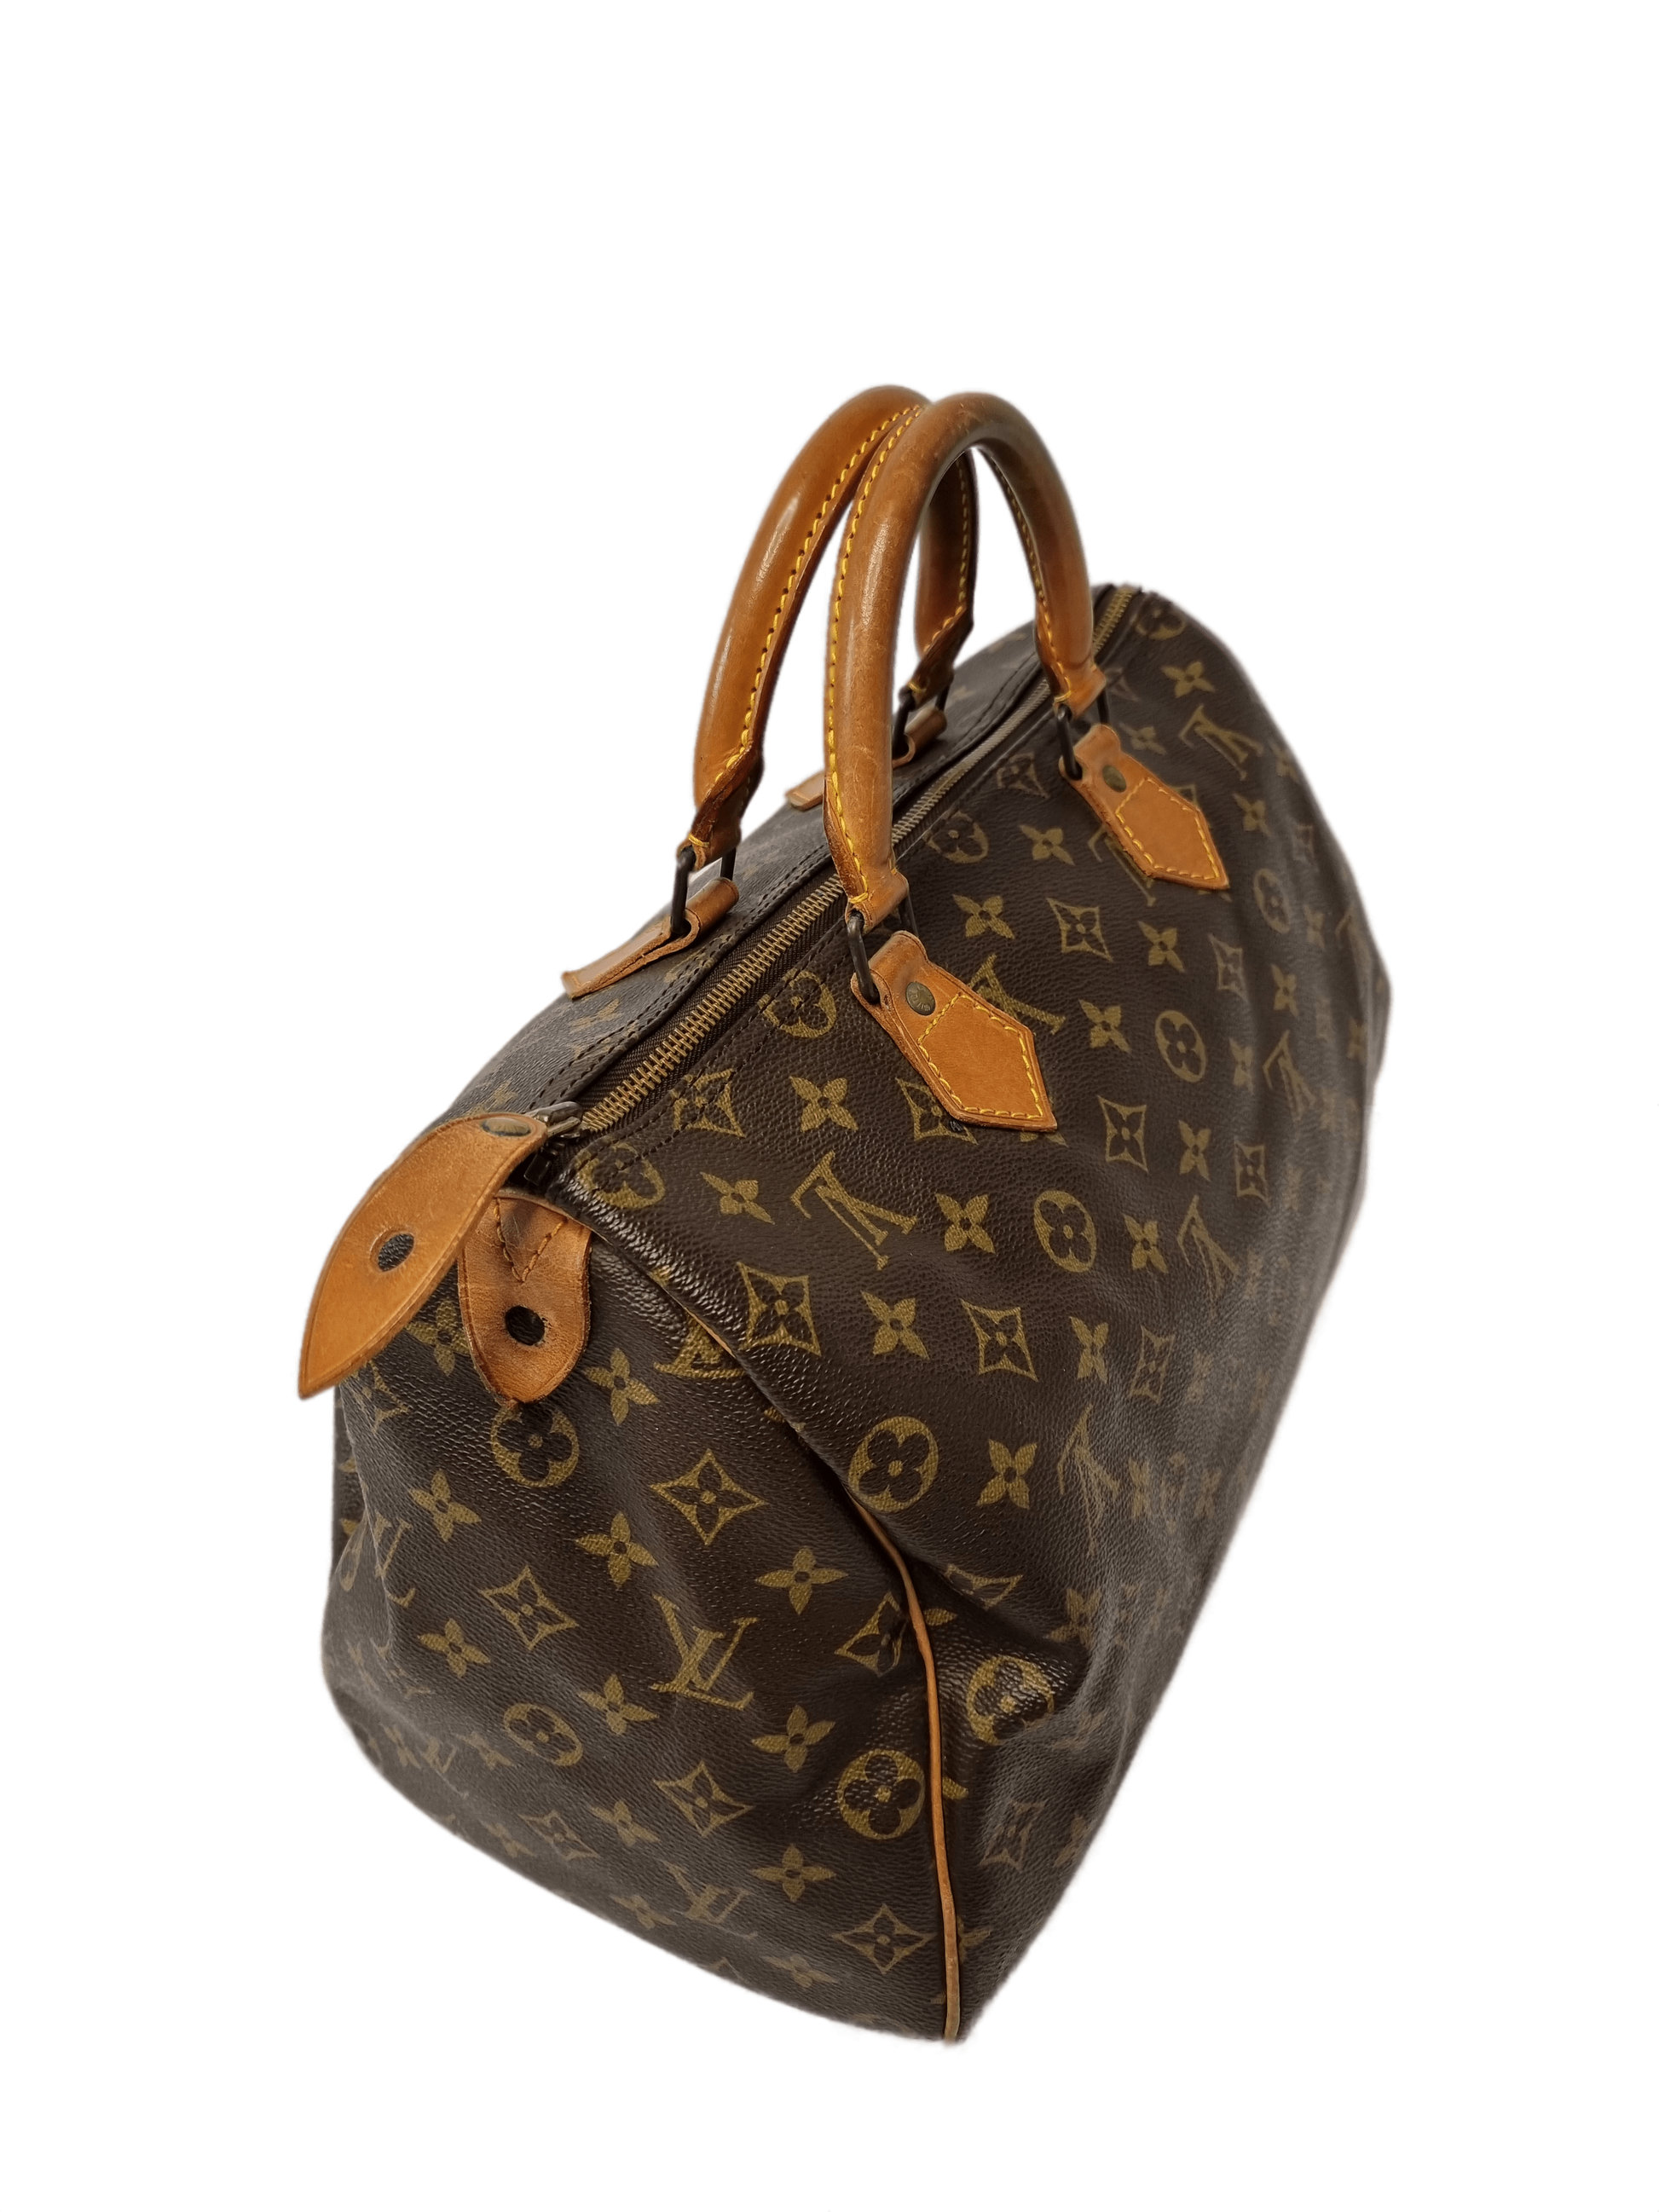 Speedy 35 Monogram - Women - Handbags